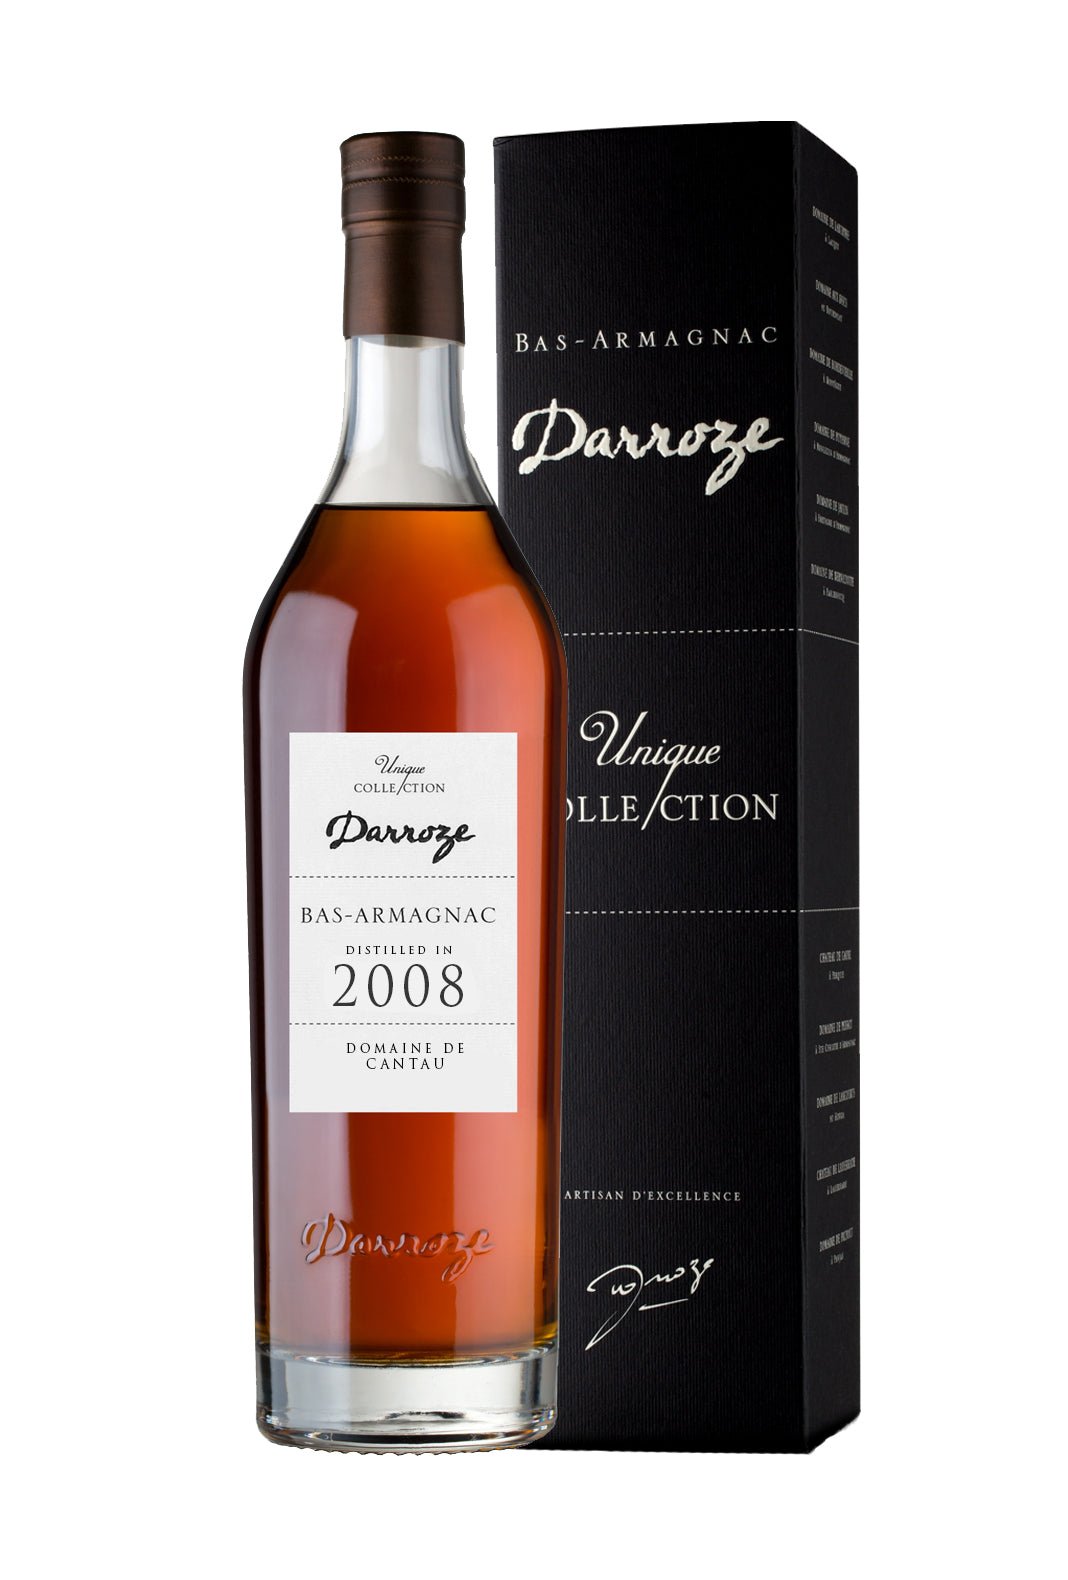 Darroze 2008 Cantau Grand Bar Armagnac 50% 700ml | armagnac | Shop online at Spirits of France